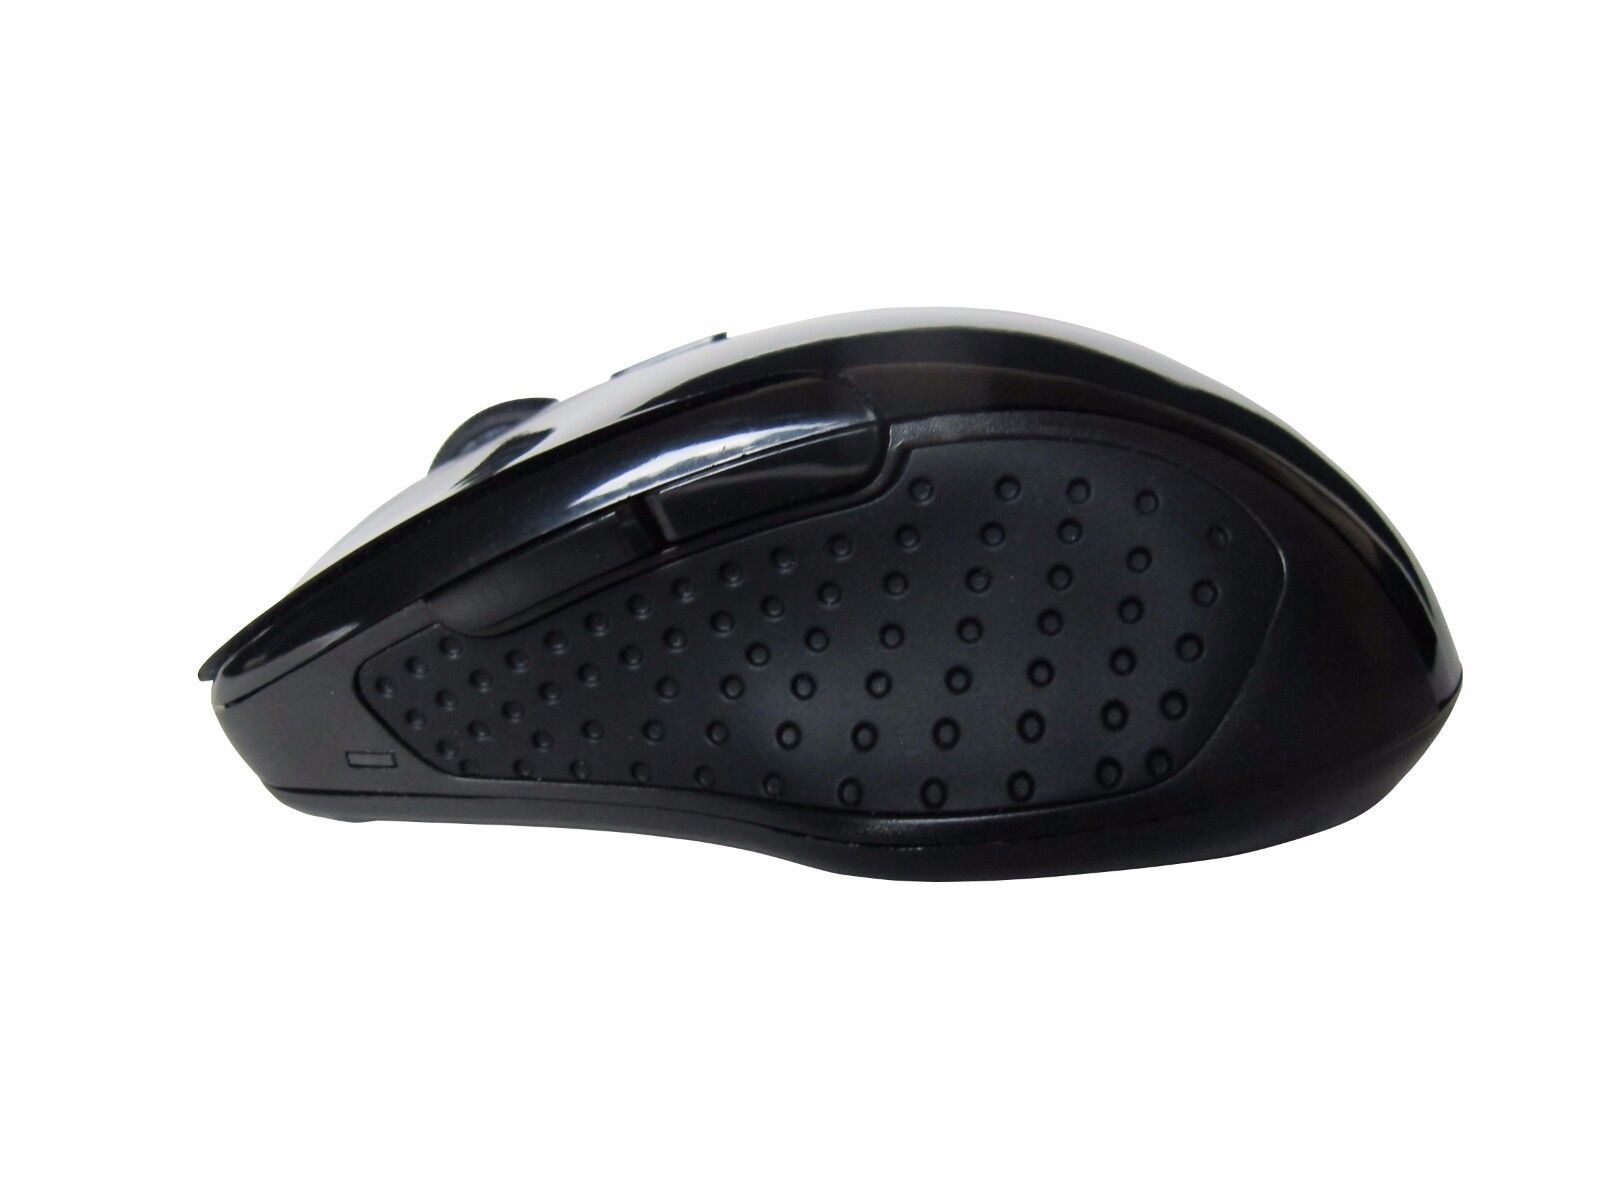 MOJO Bluetooth Wireless Silent Mouse Optical Quiet Ninja Noiseless Mouse BLACK 